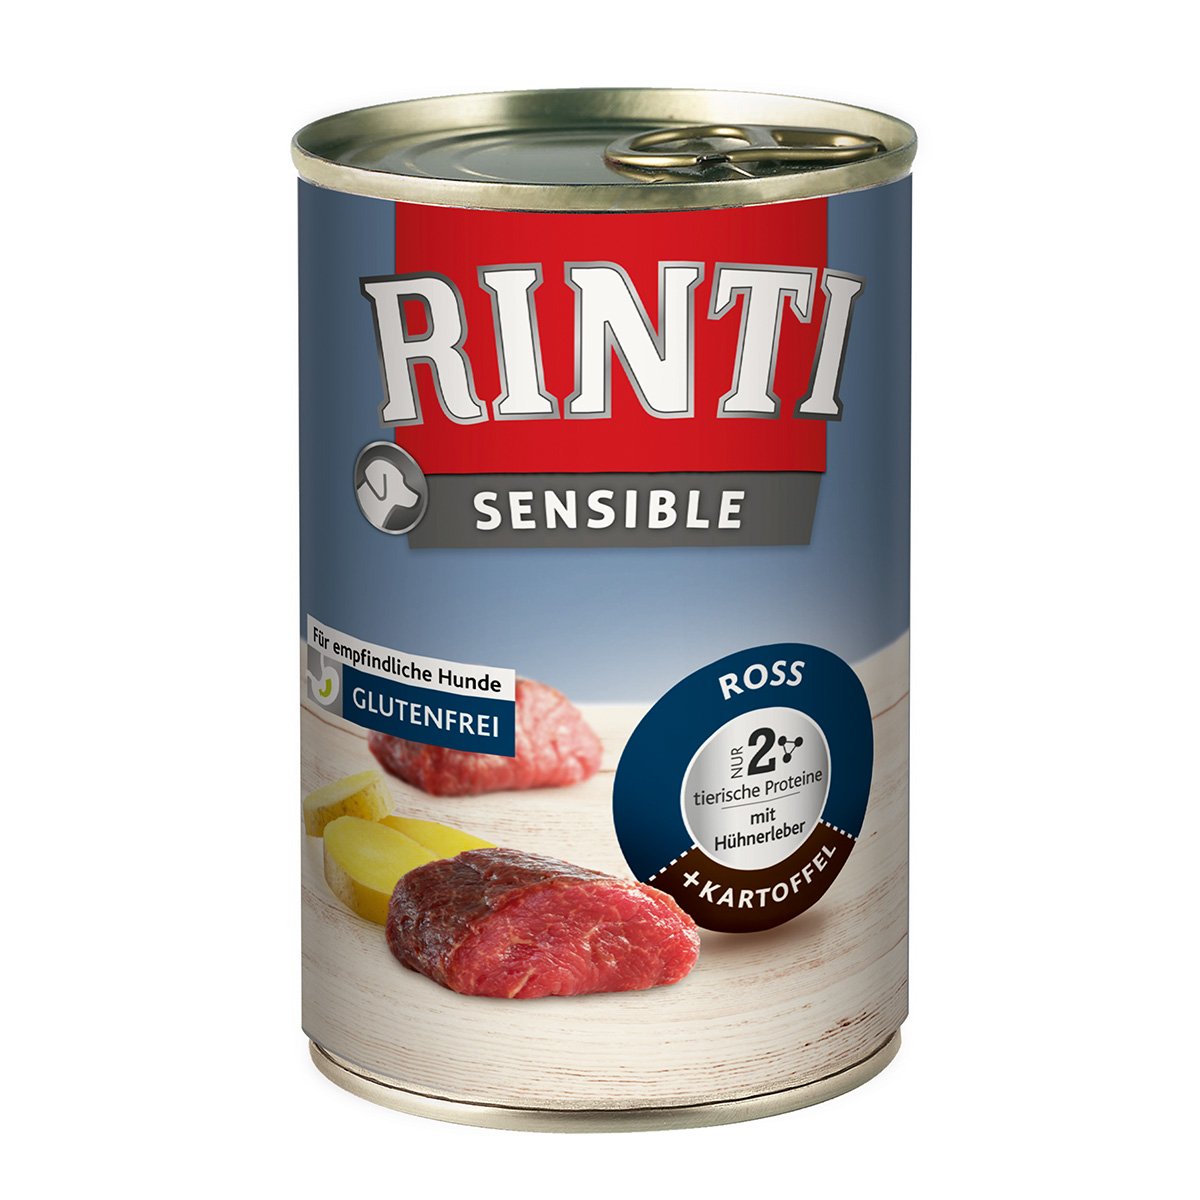 Rinti Sensible Ross & Hühnerleber & Kartoffel 24x400g